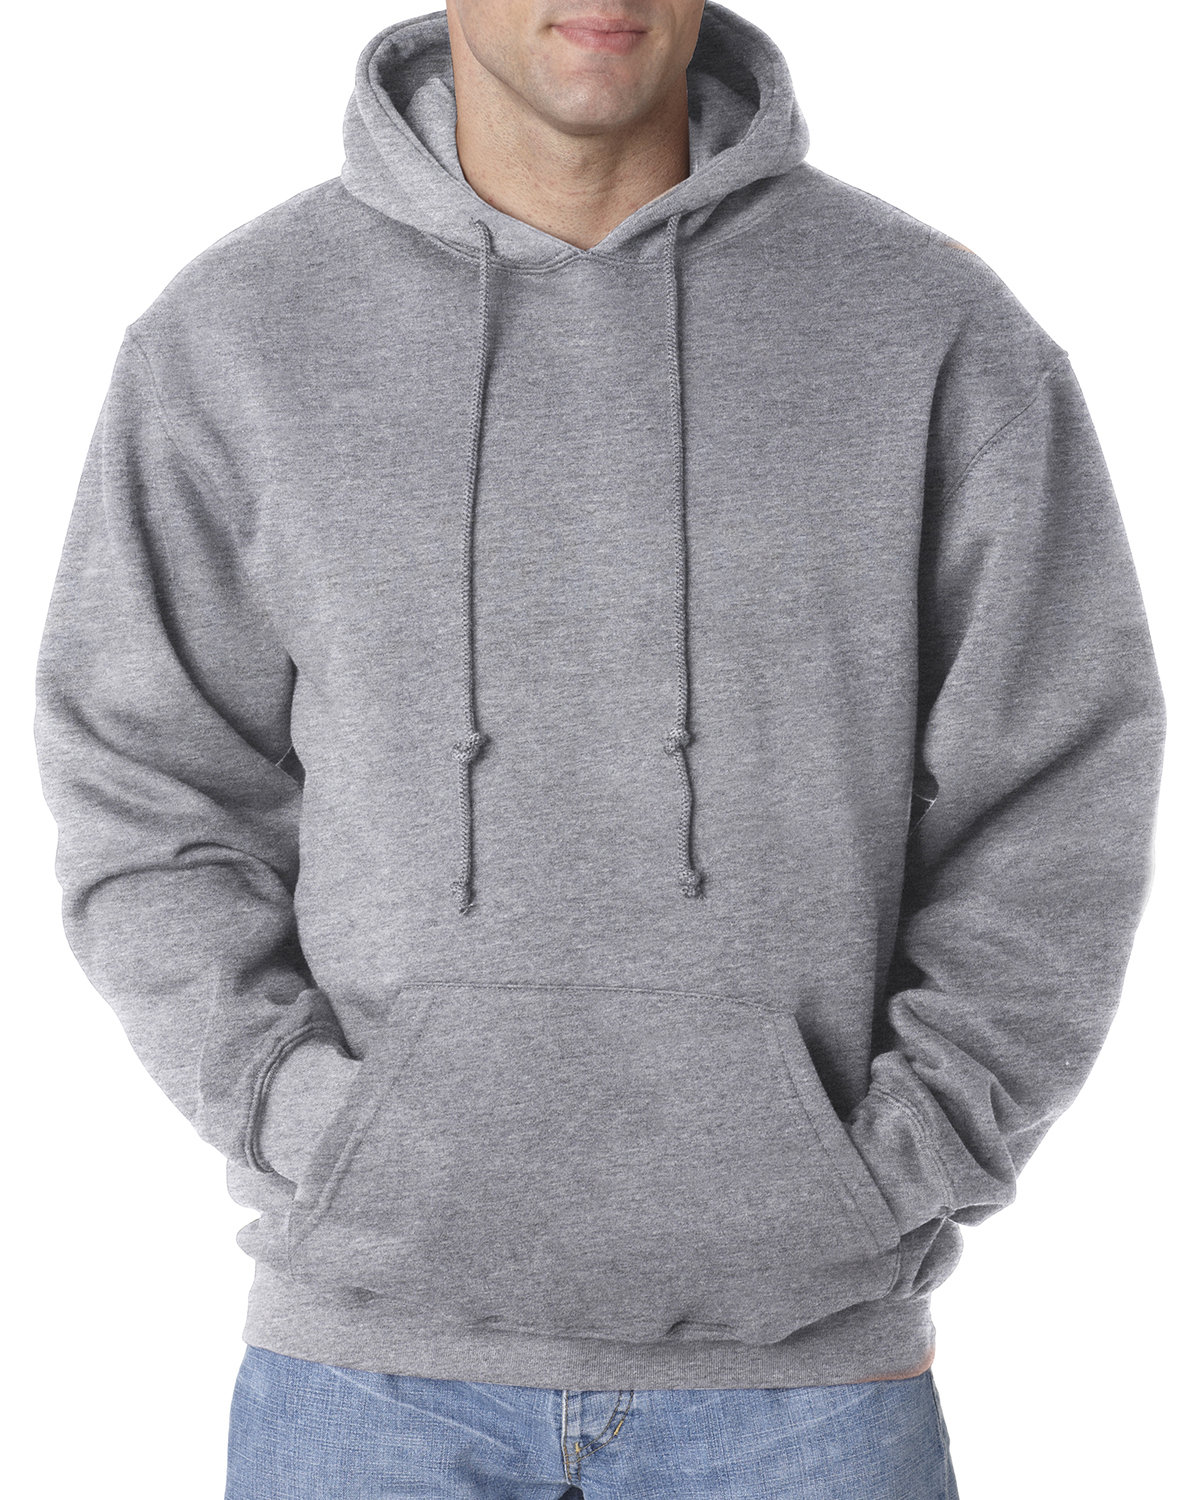 Adult Pullover Hooded Sweatshirt-